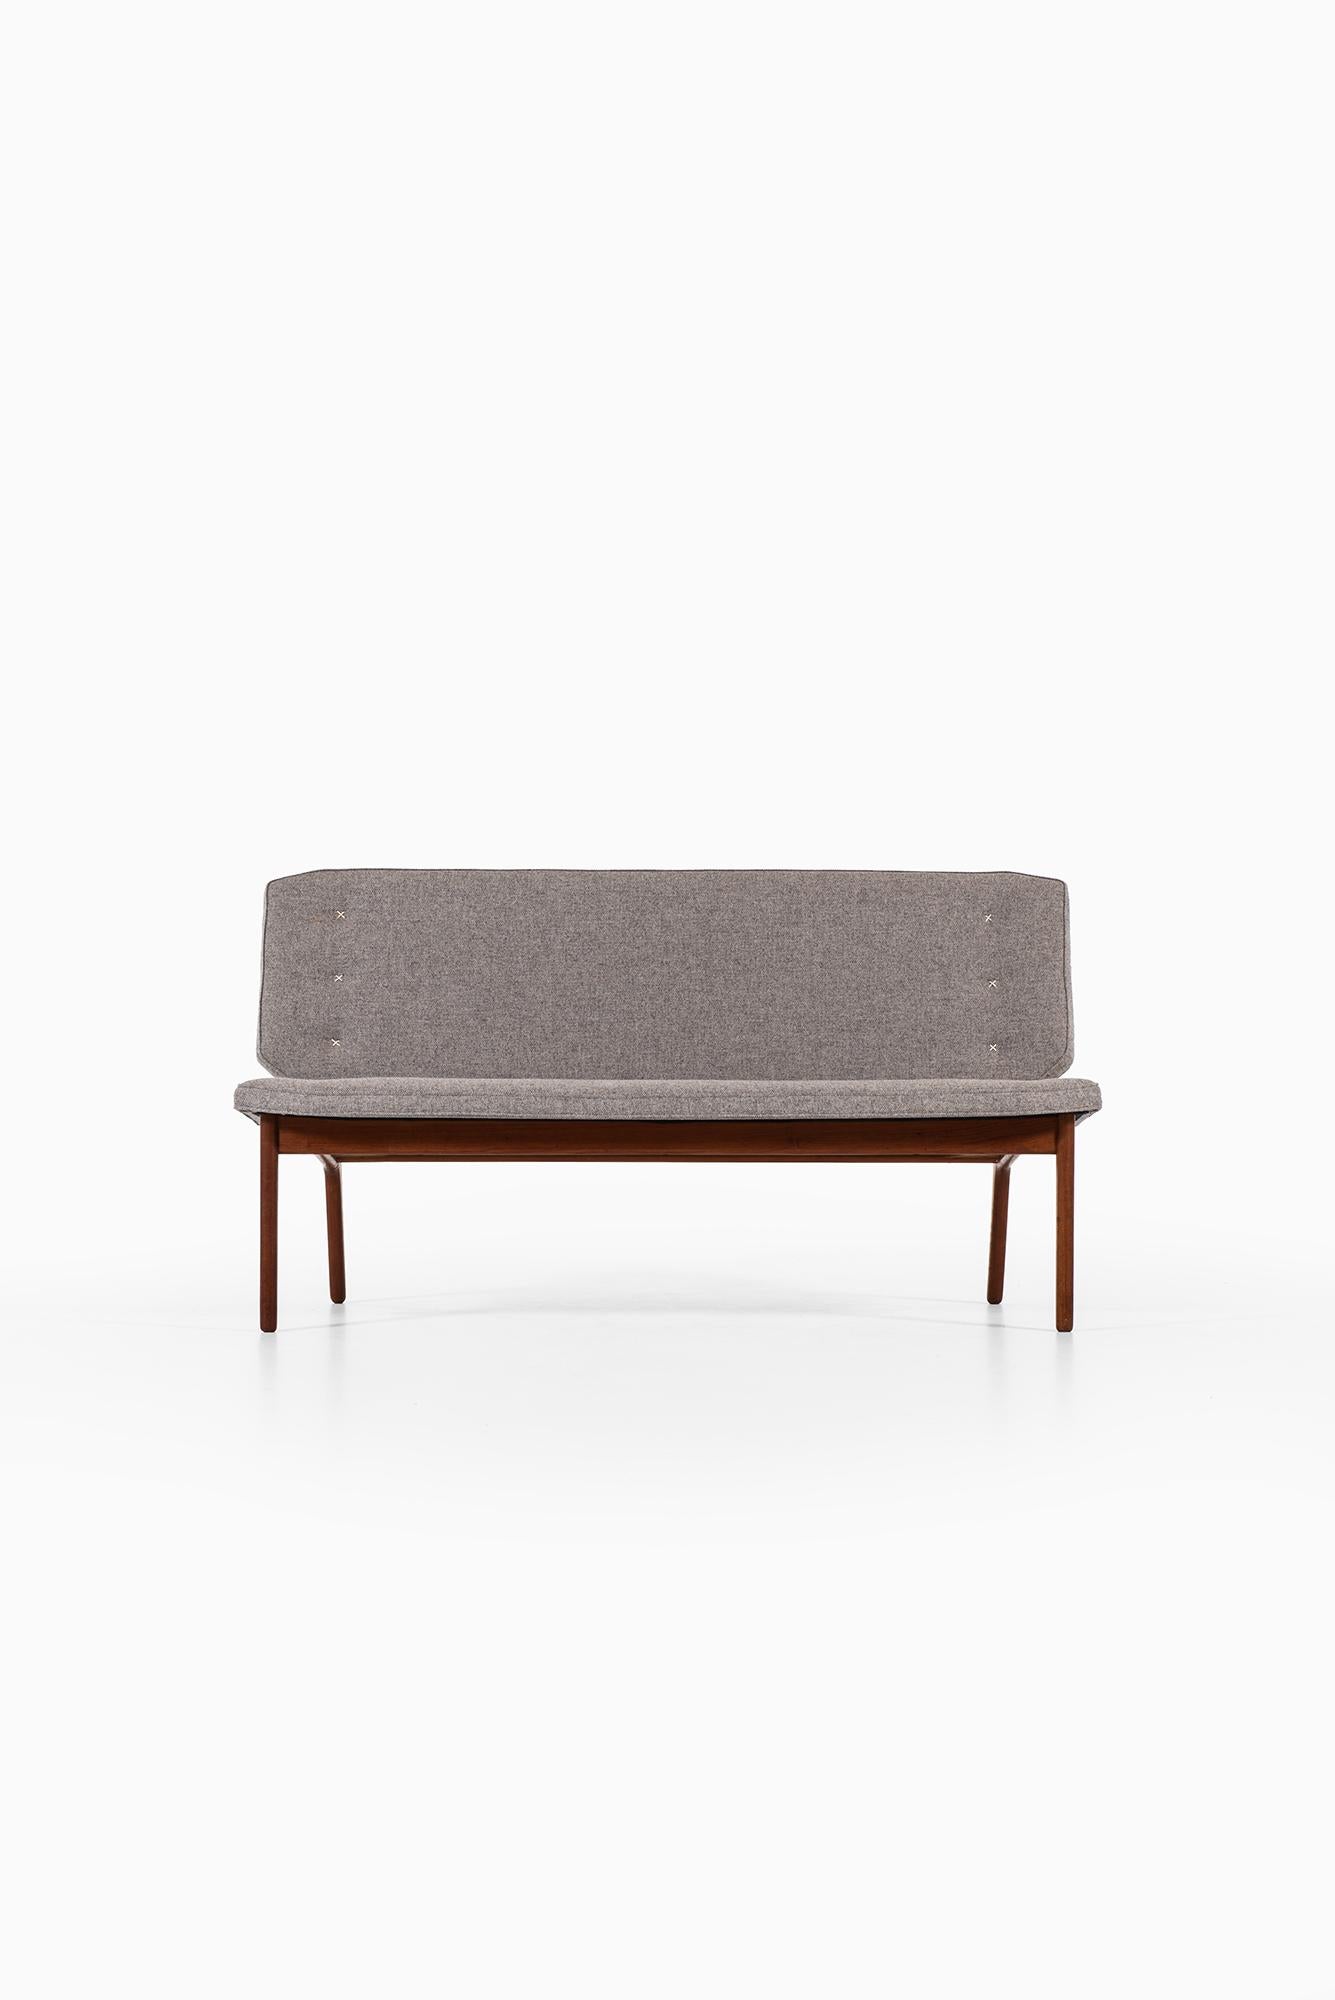 Rare sofa by unknown designer. Produced in Denmark.